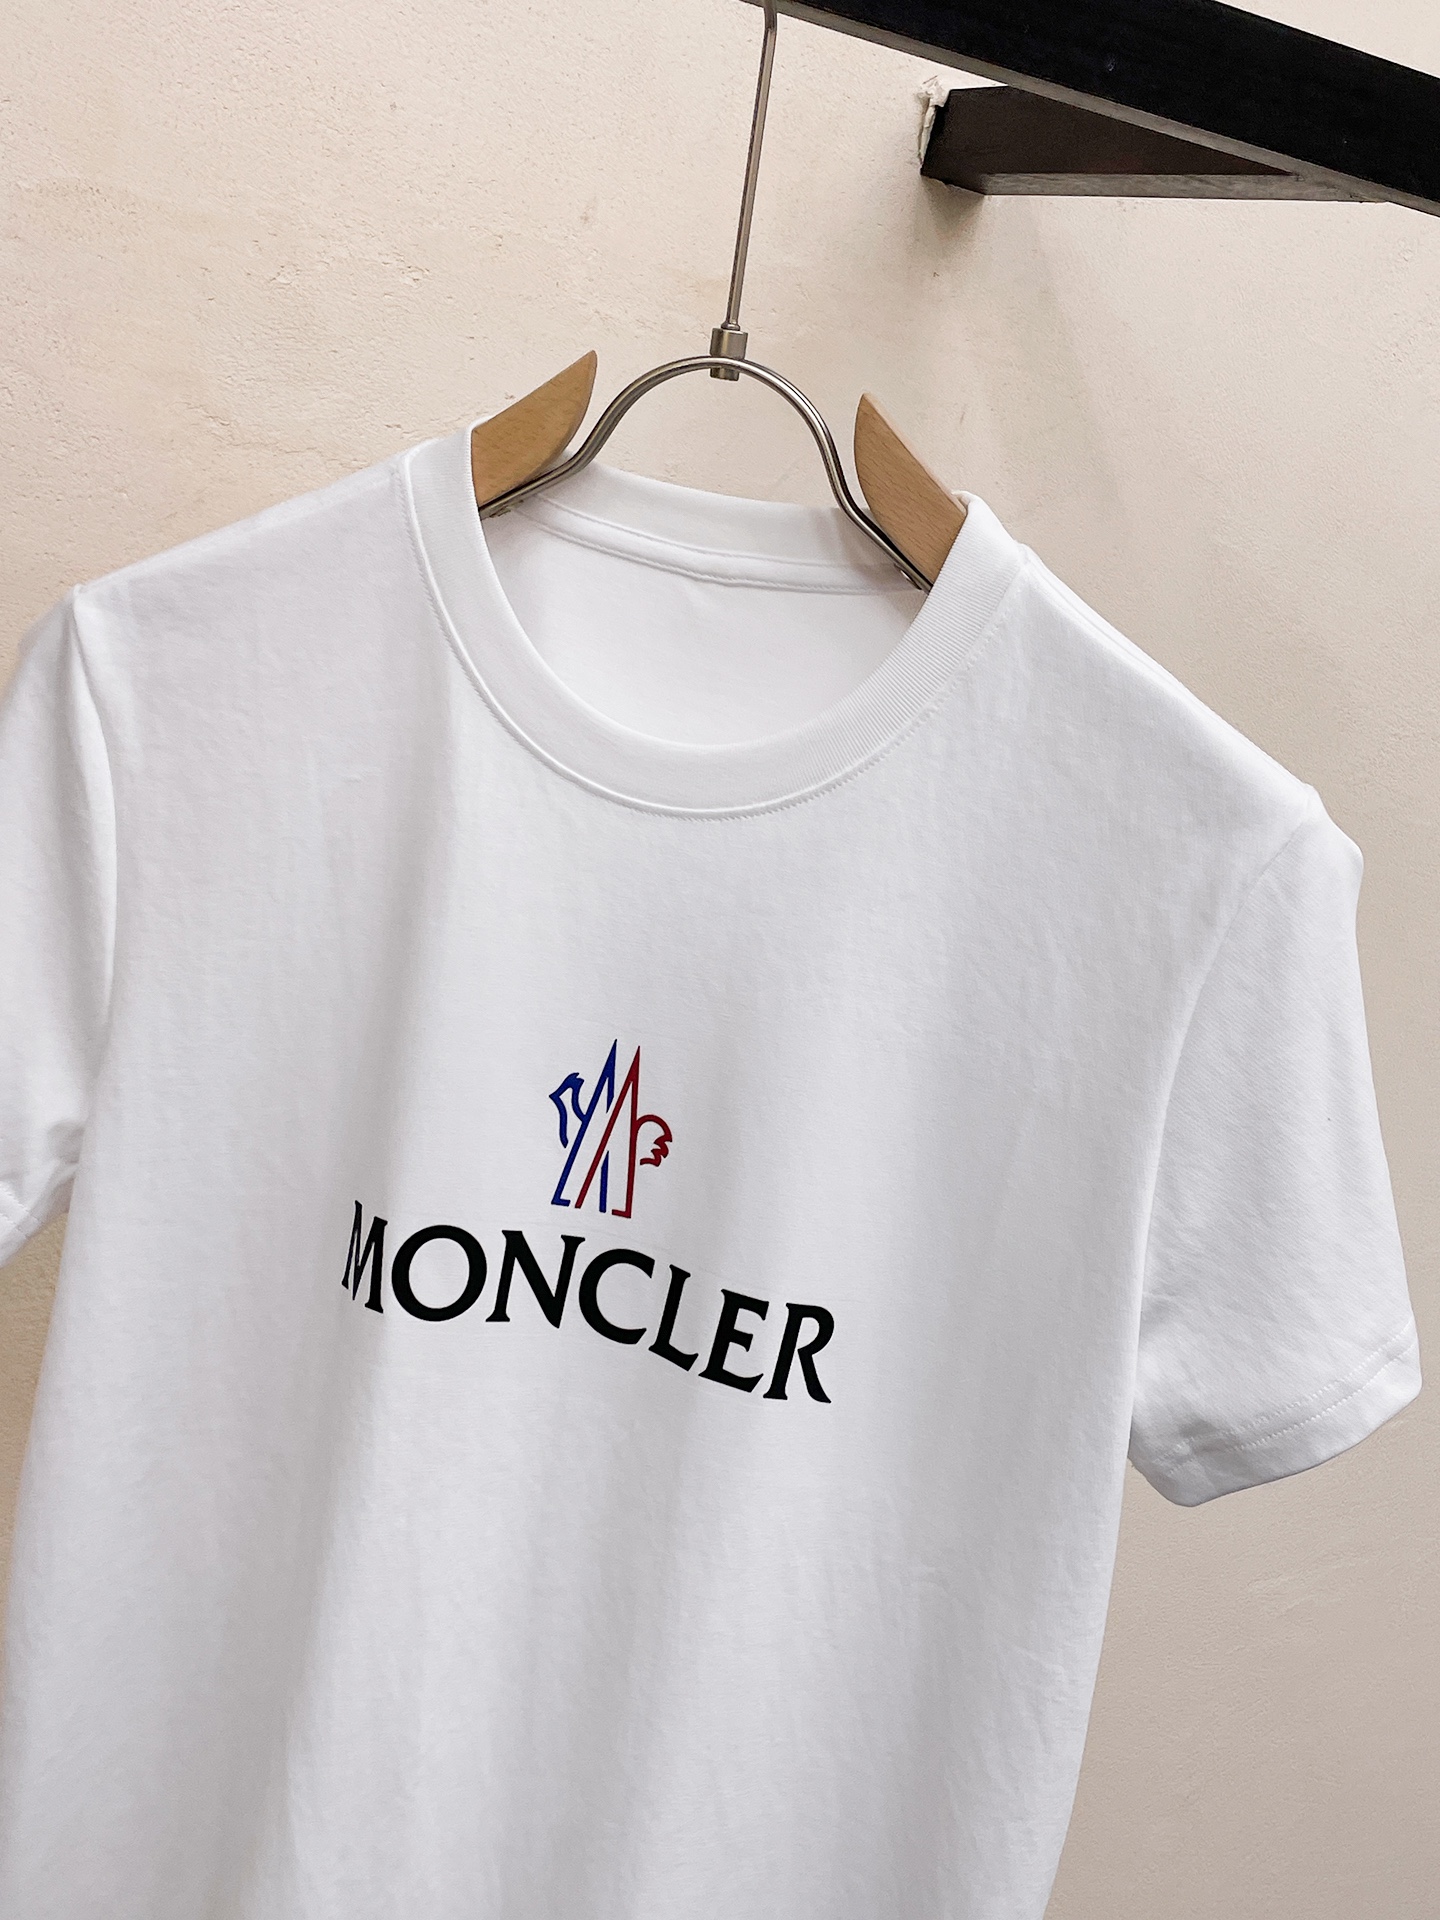 MO24最新款情侣款短袖T恤品牌新元素字母logo面料上身舒适透气不僵硬修身的剪裁采用定制面料.上身舒适